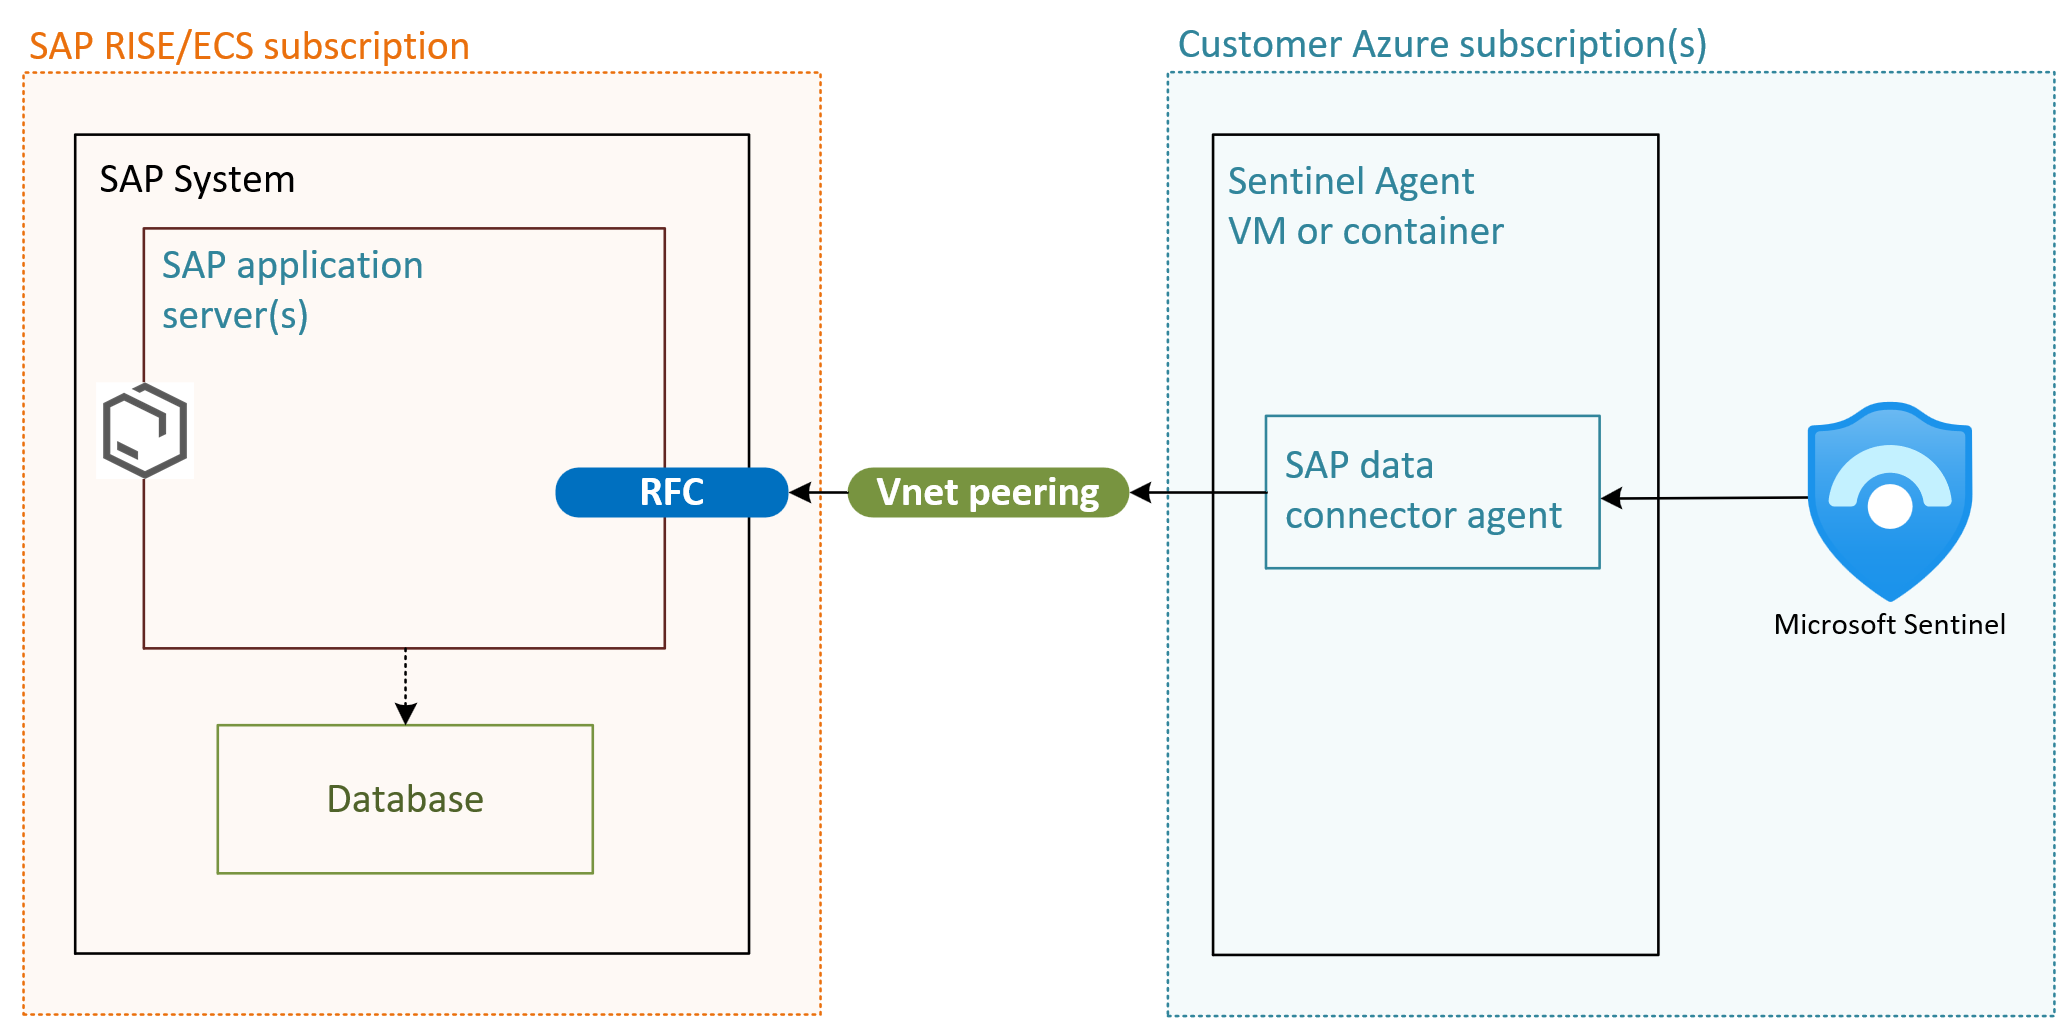 Menghubungkan Sentinel dengan SAP RISE/ECS